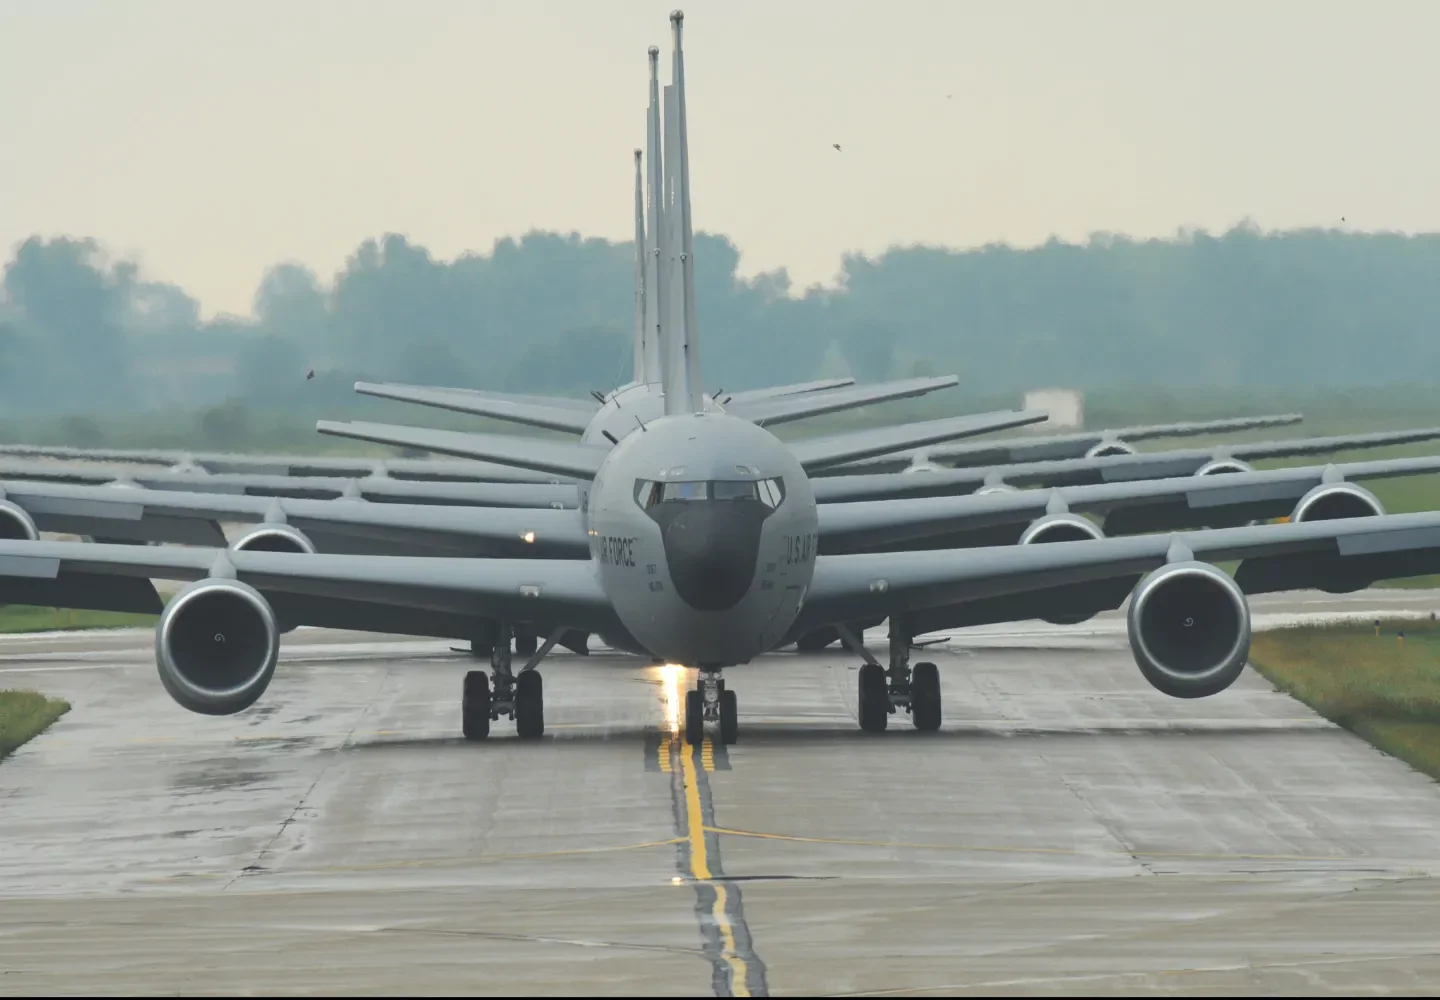 U.S. Air Force airplanes on a runway